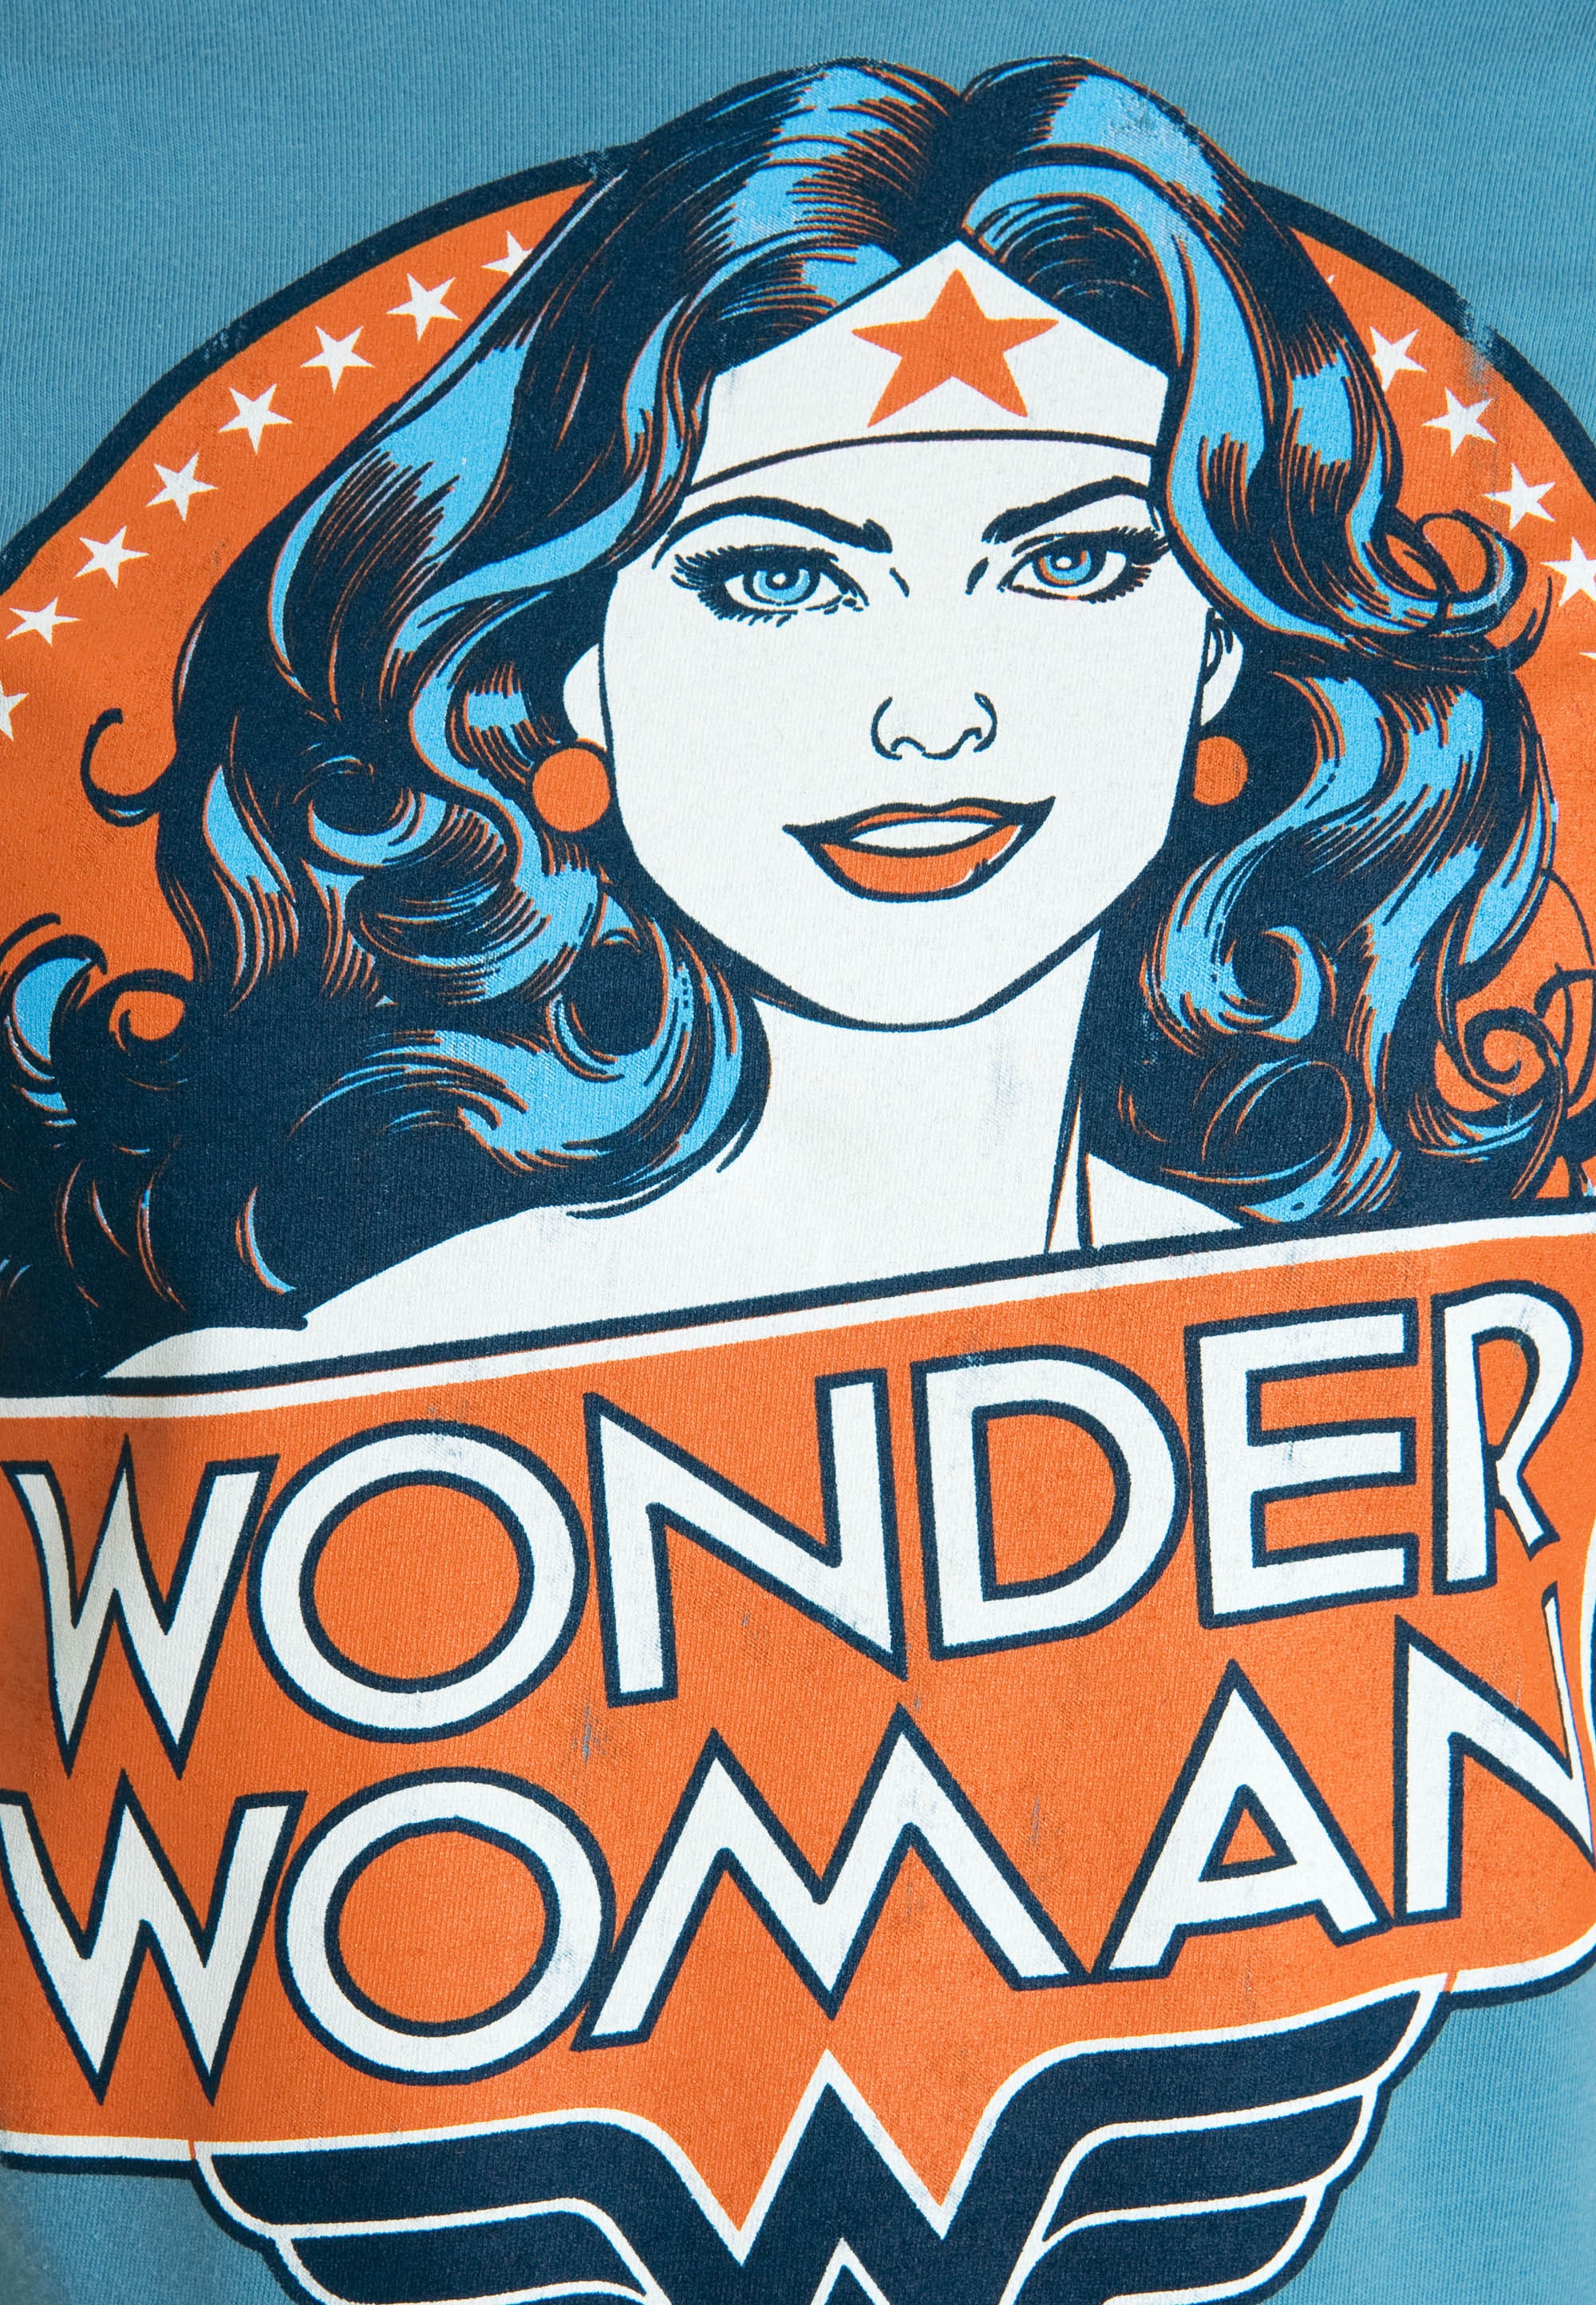 LOGOSHIRT T-Shirt »Wonder Woman Portrait«, mit lizenziertem Originaldesign